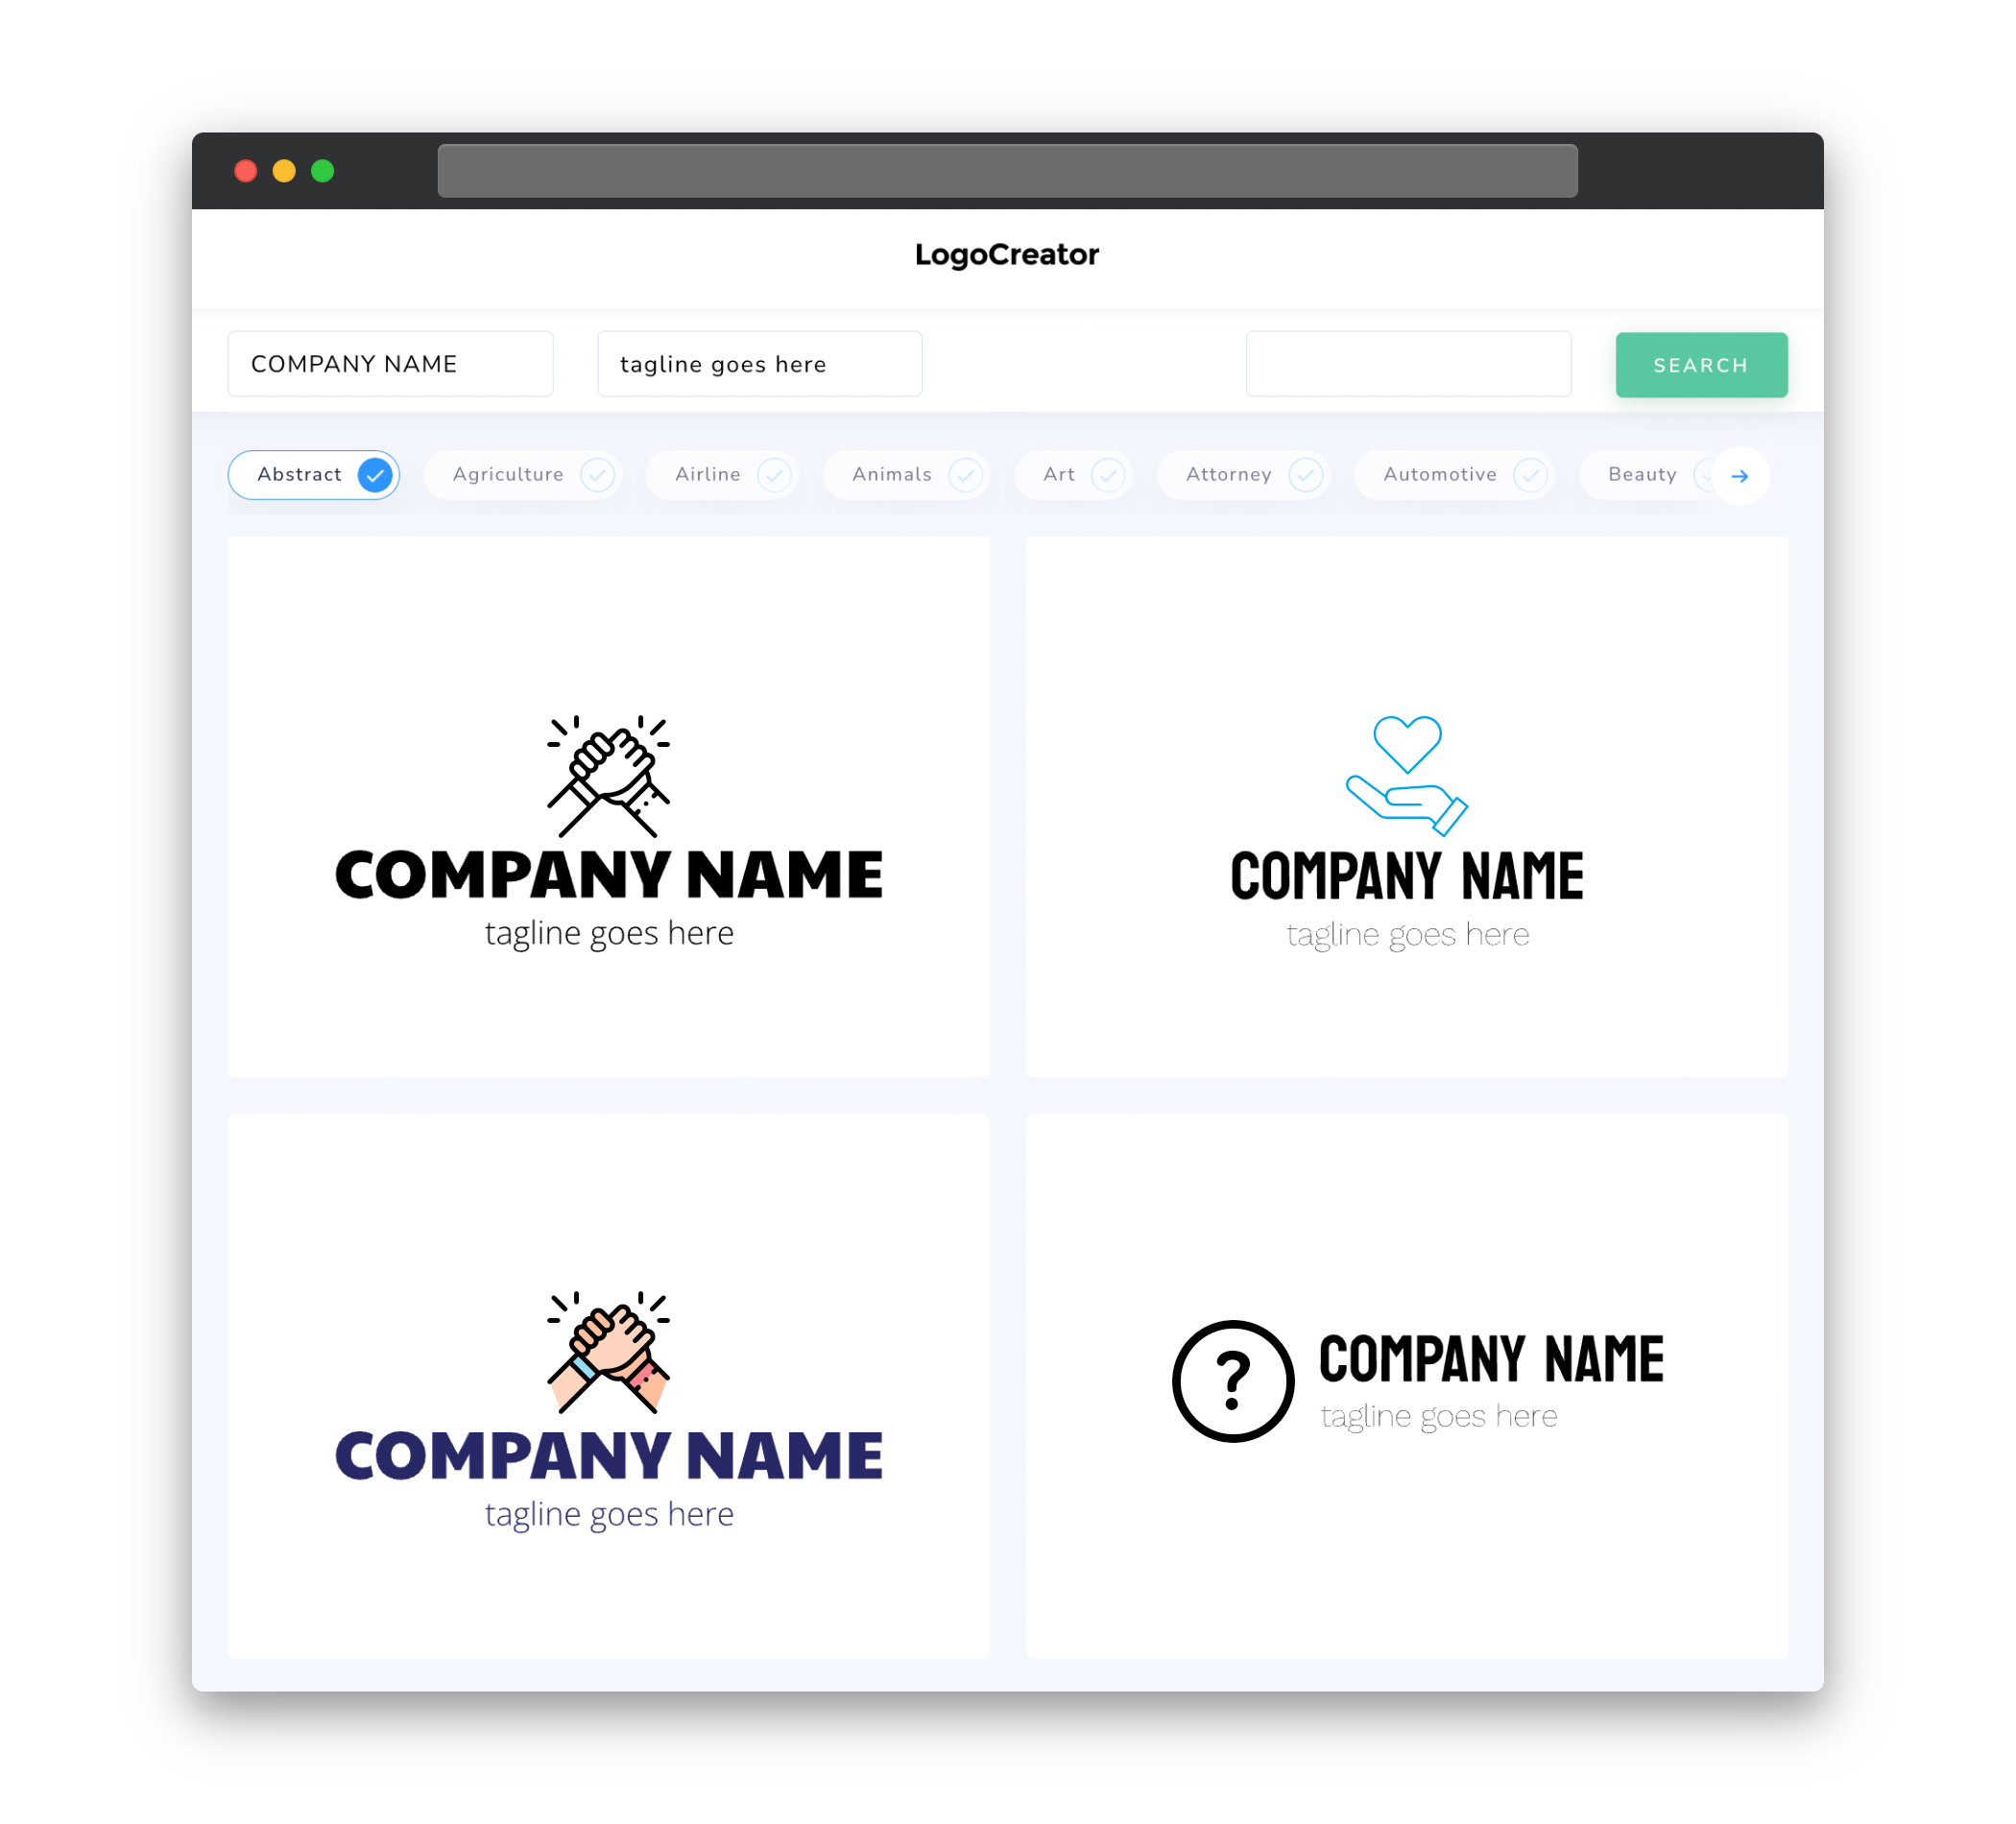 Help Logo Design: Create Your Own Help Logos